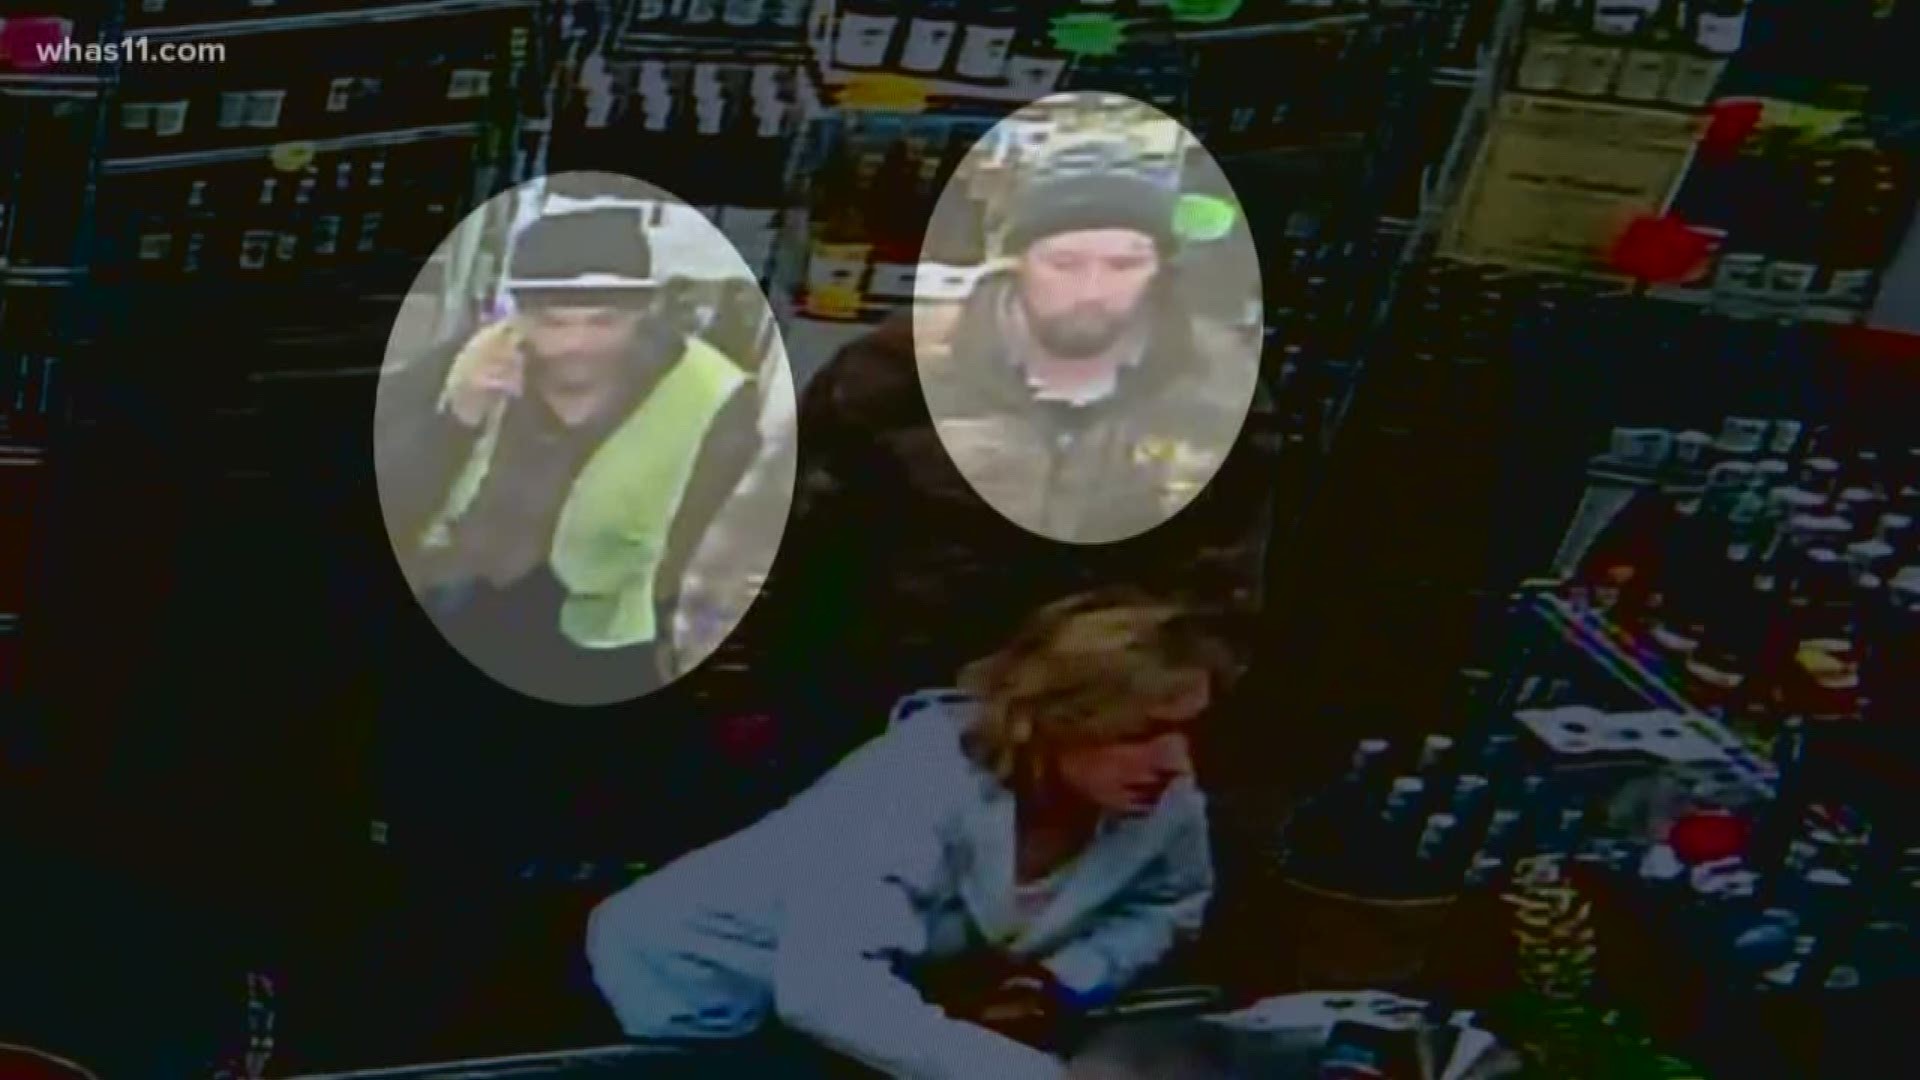 The three suspects stole around $500 of liquor at Top Hat Liquor Store.